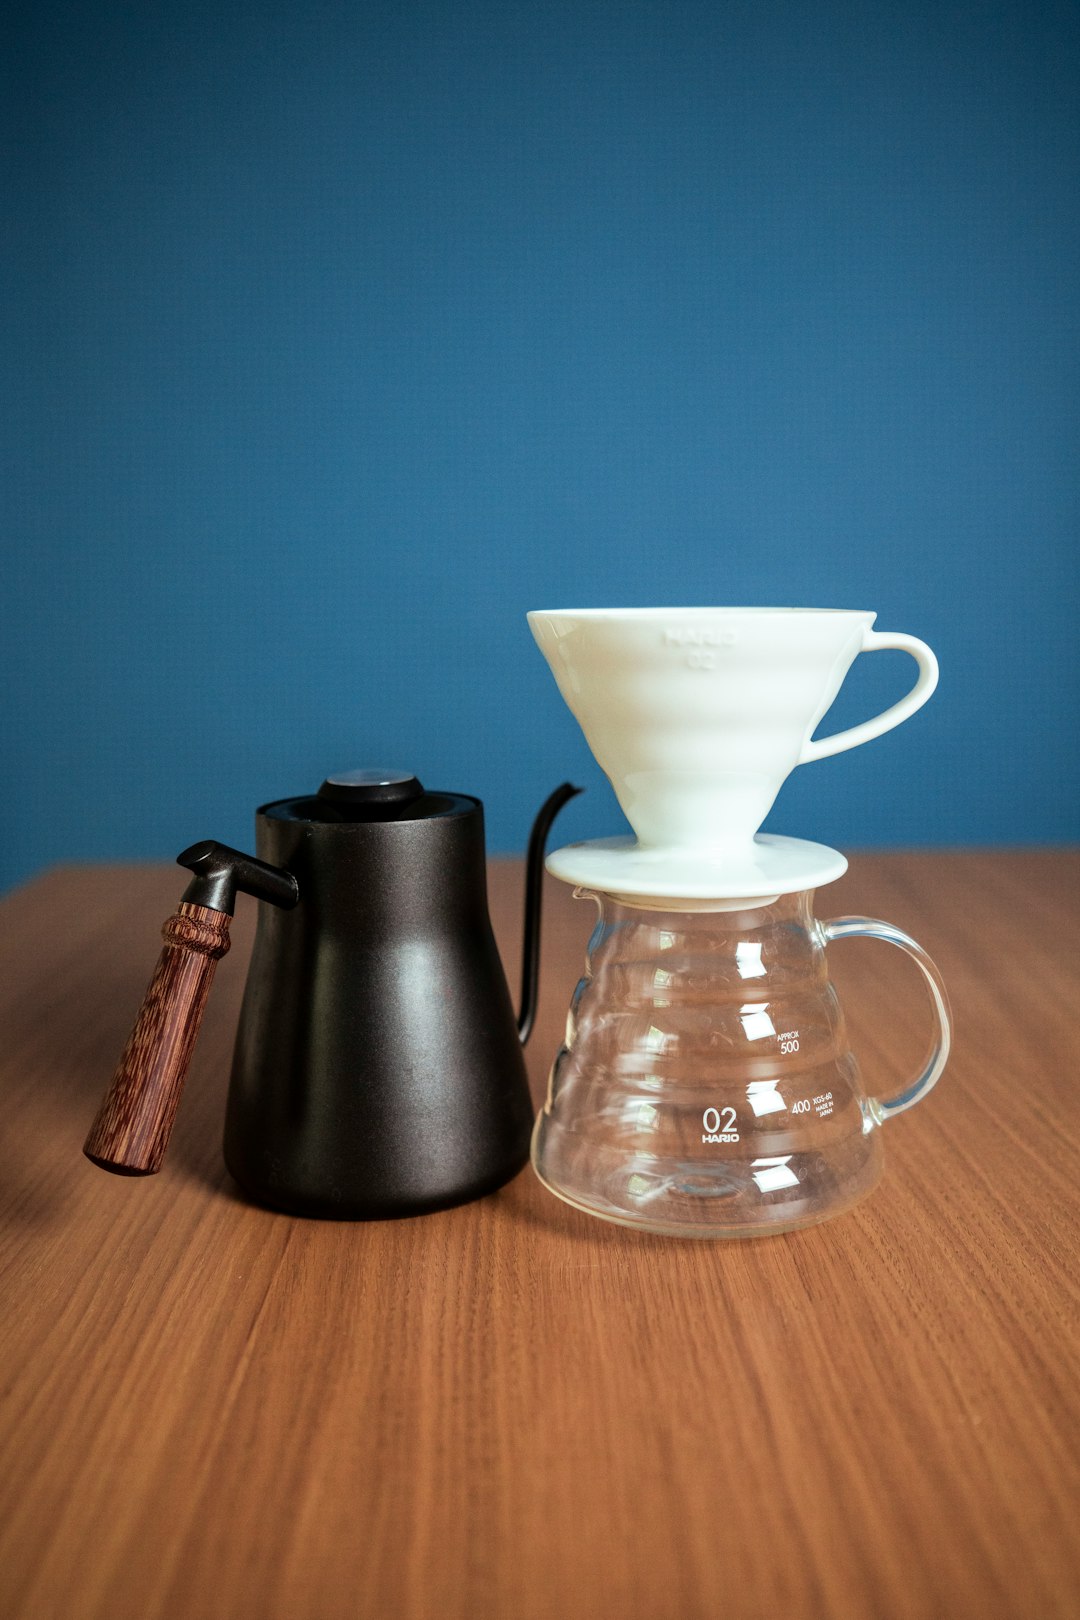 black and silver coffee maker beside white ceramic mug